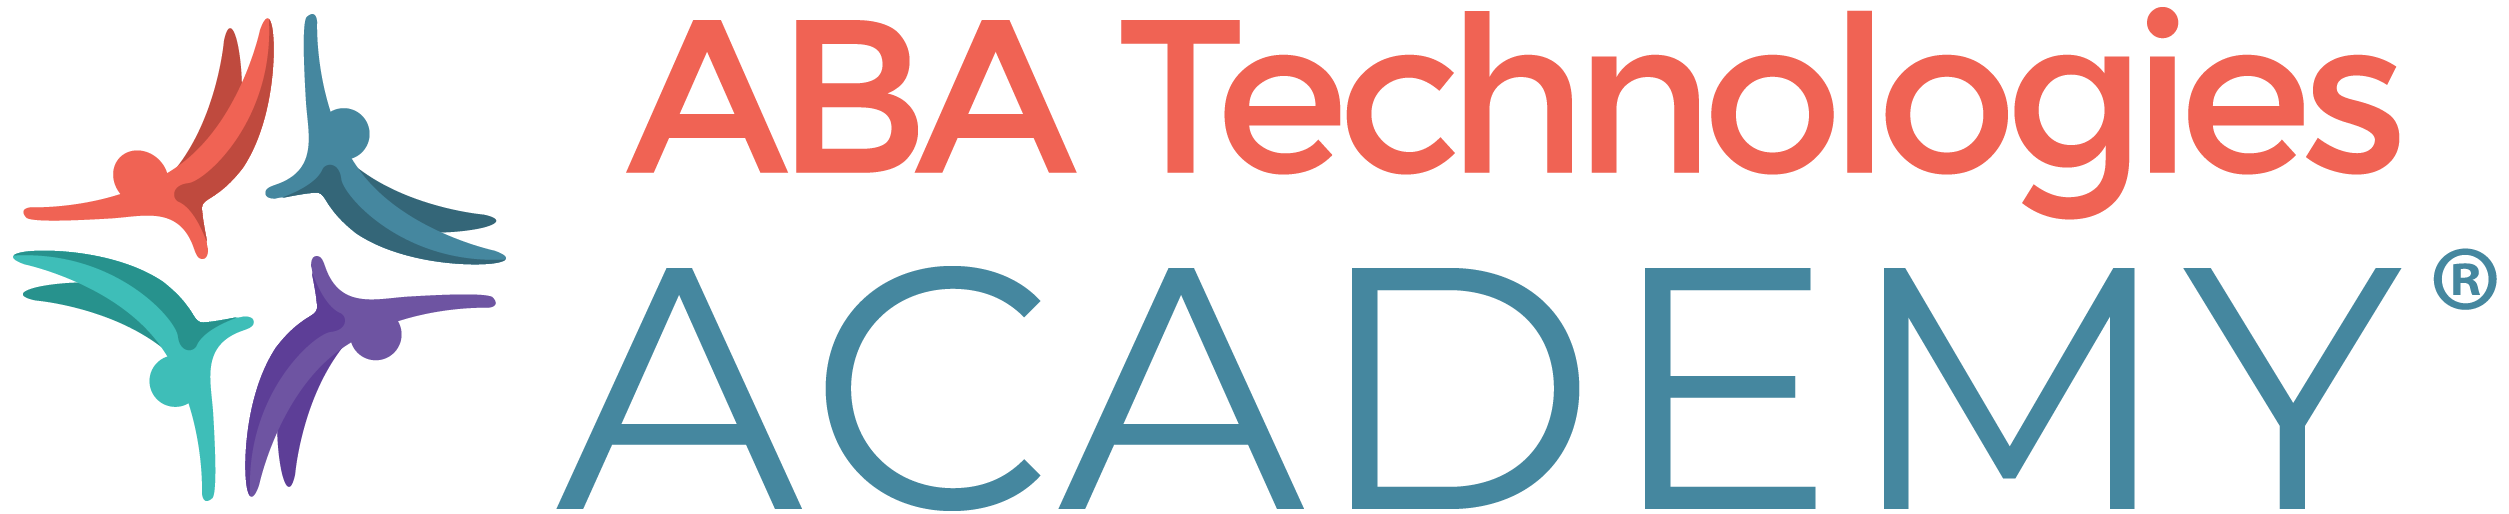 ABA Technologies Academy Logo